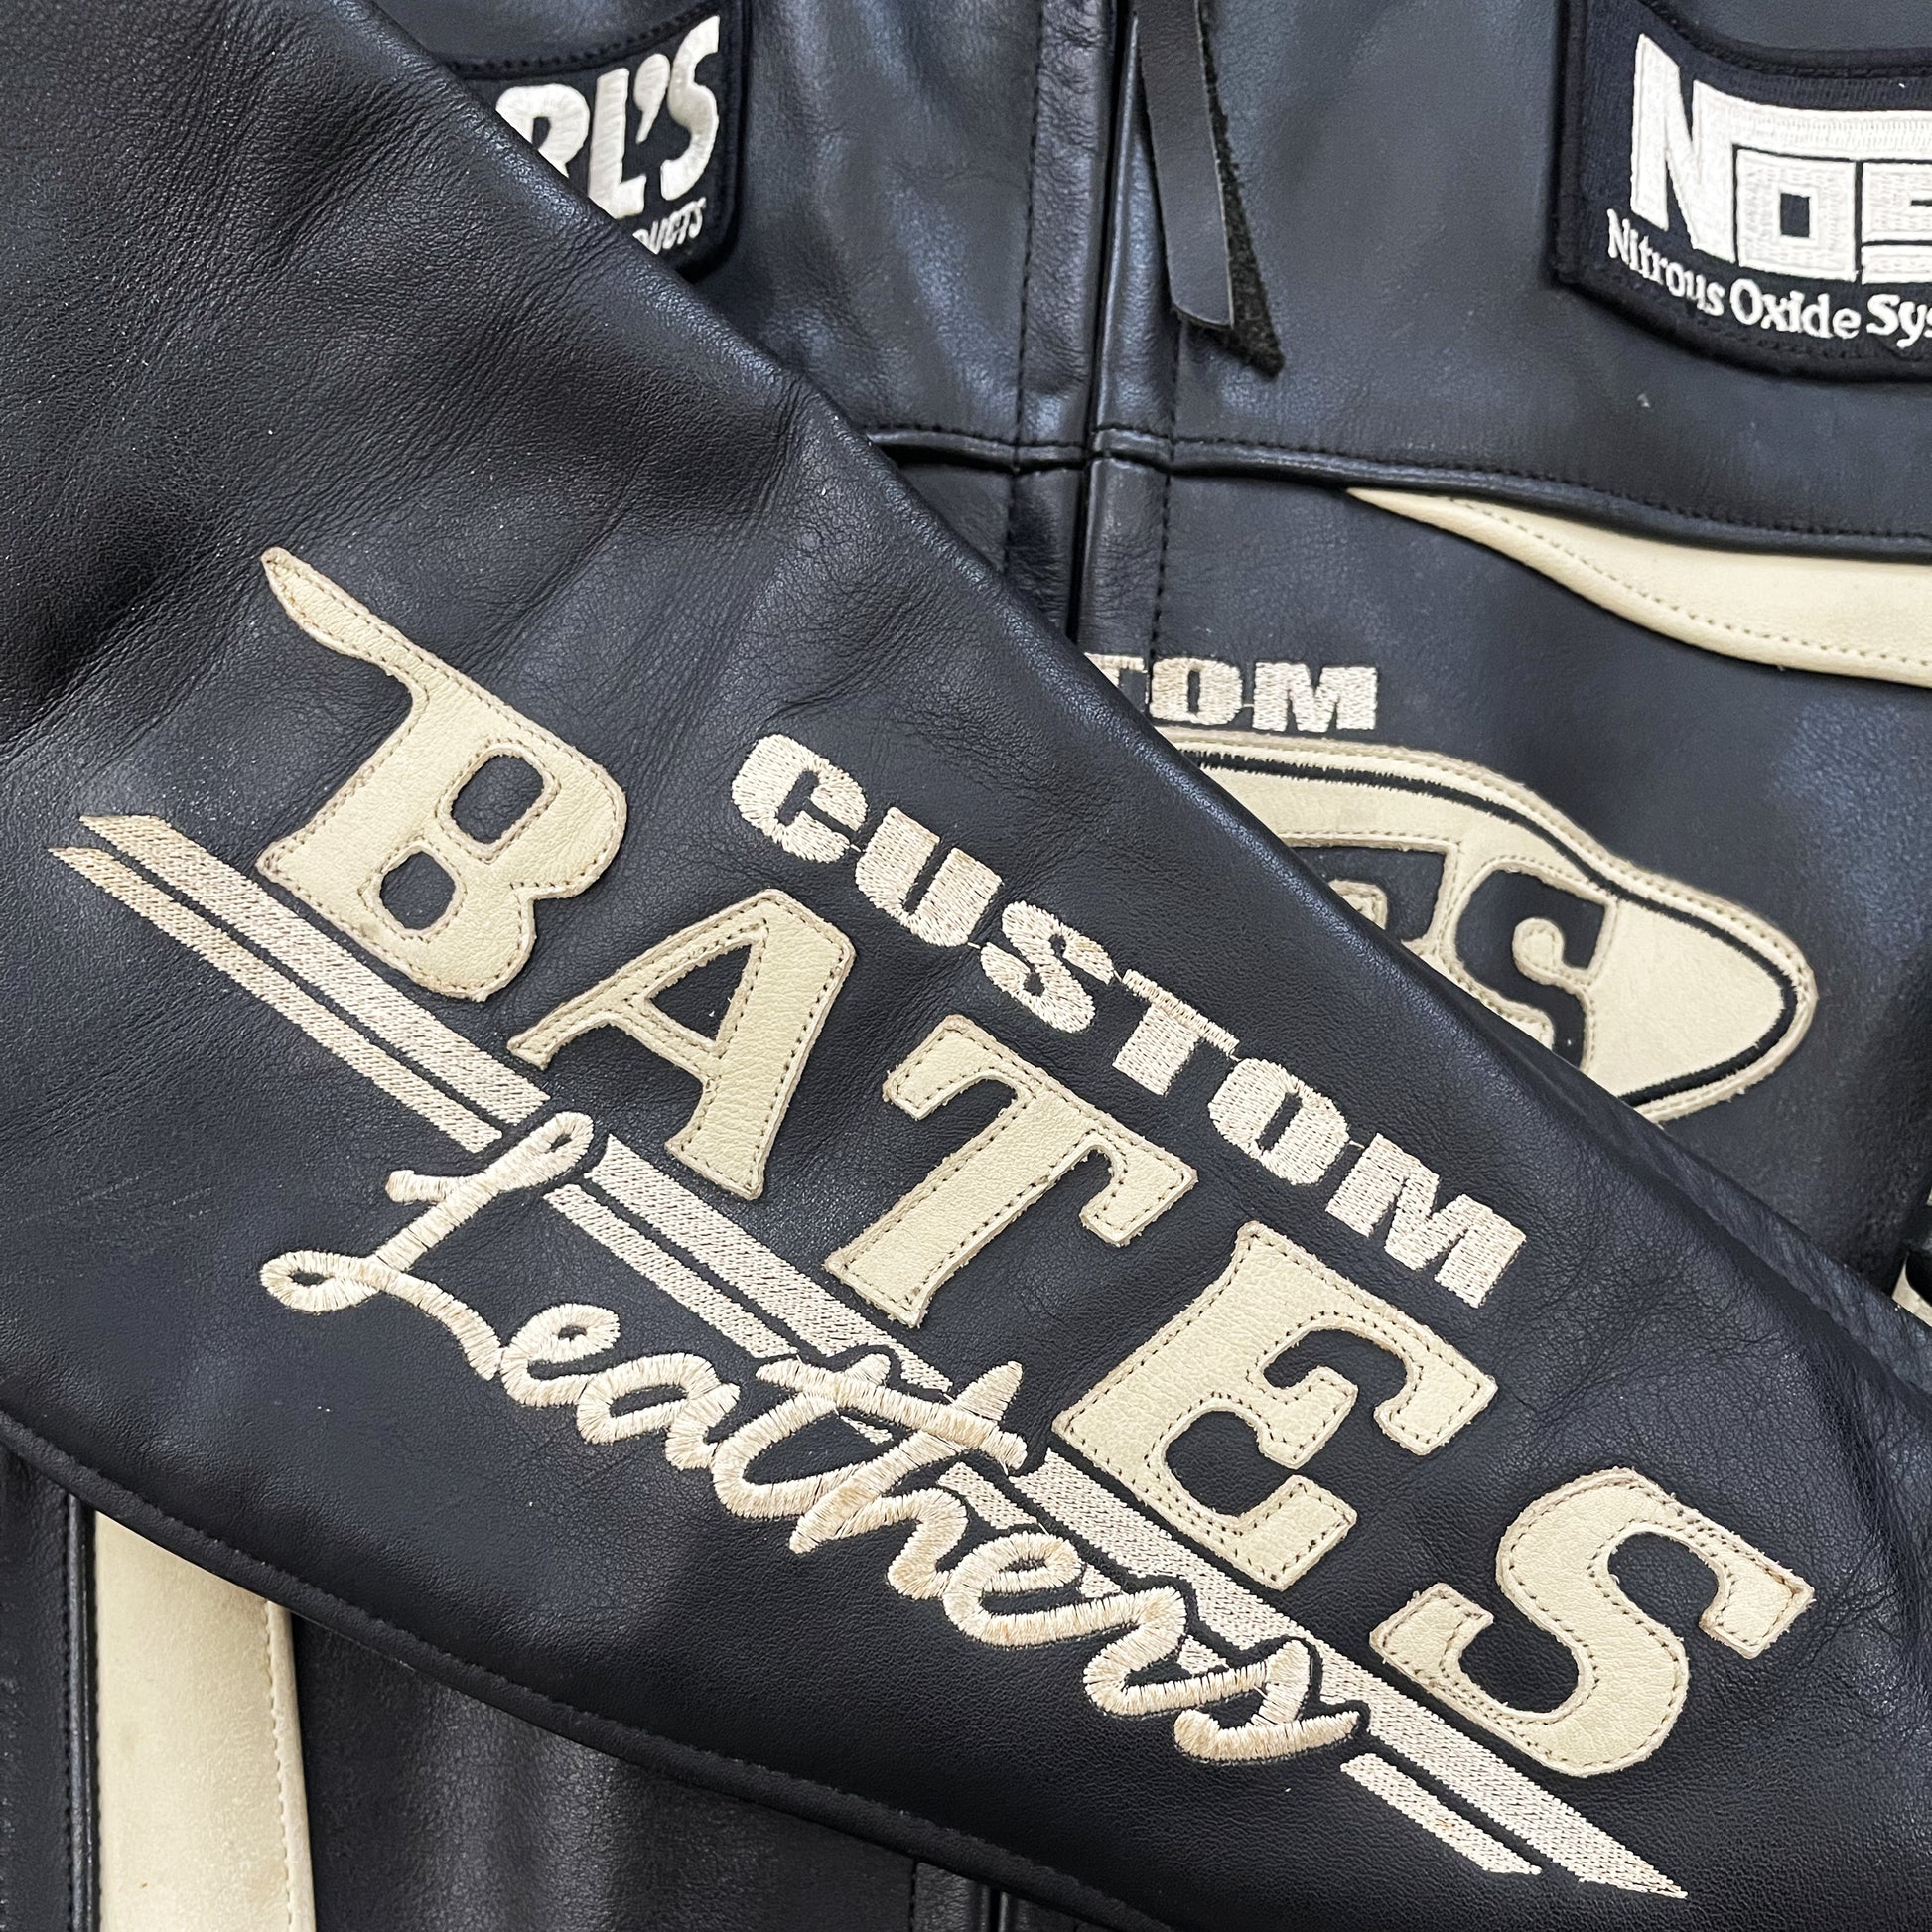 Bates Leathers Biker Jacket